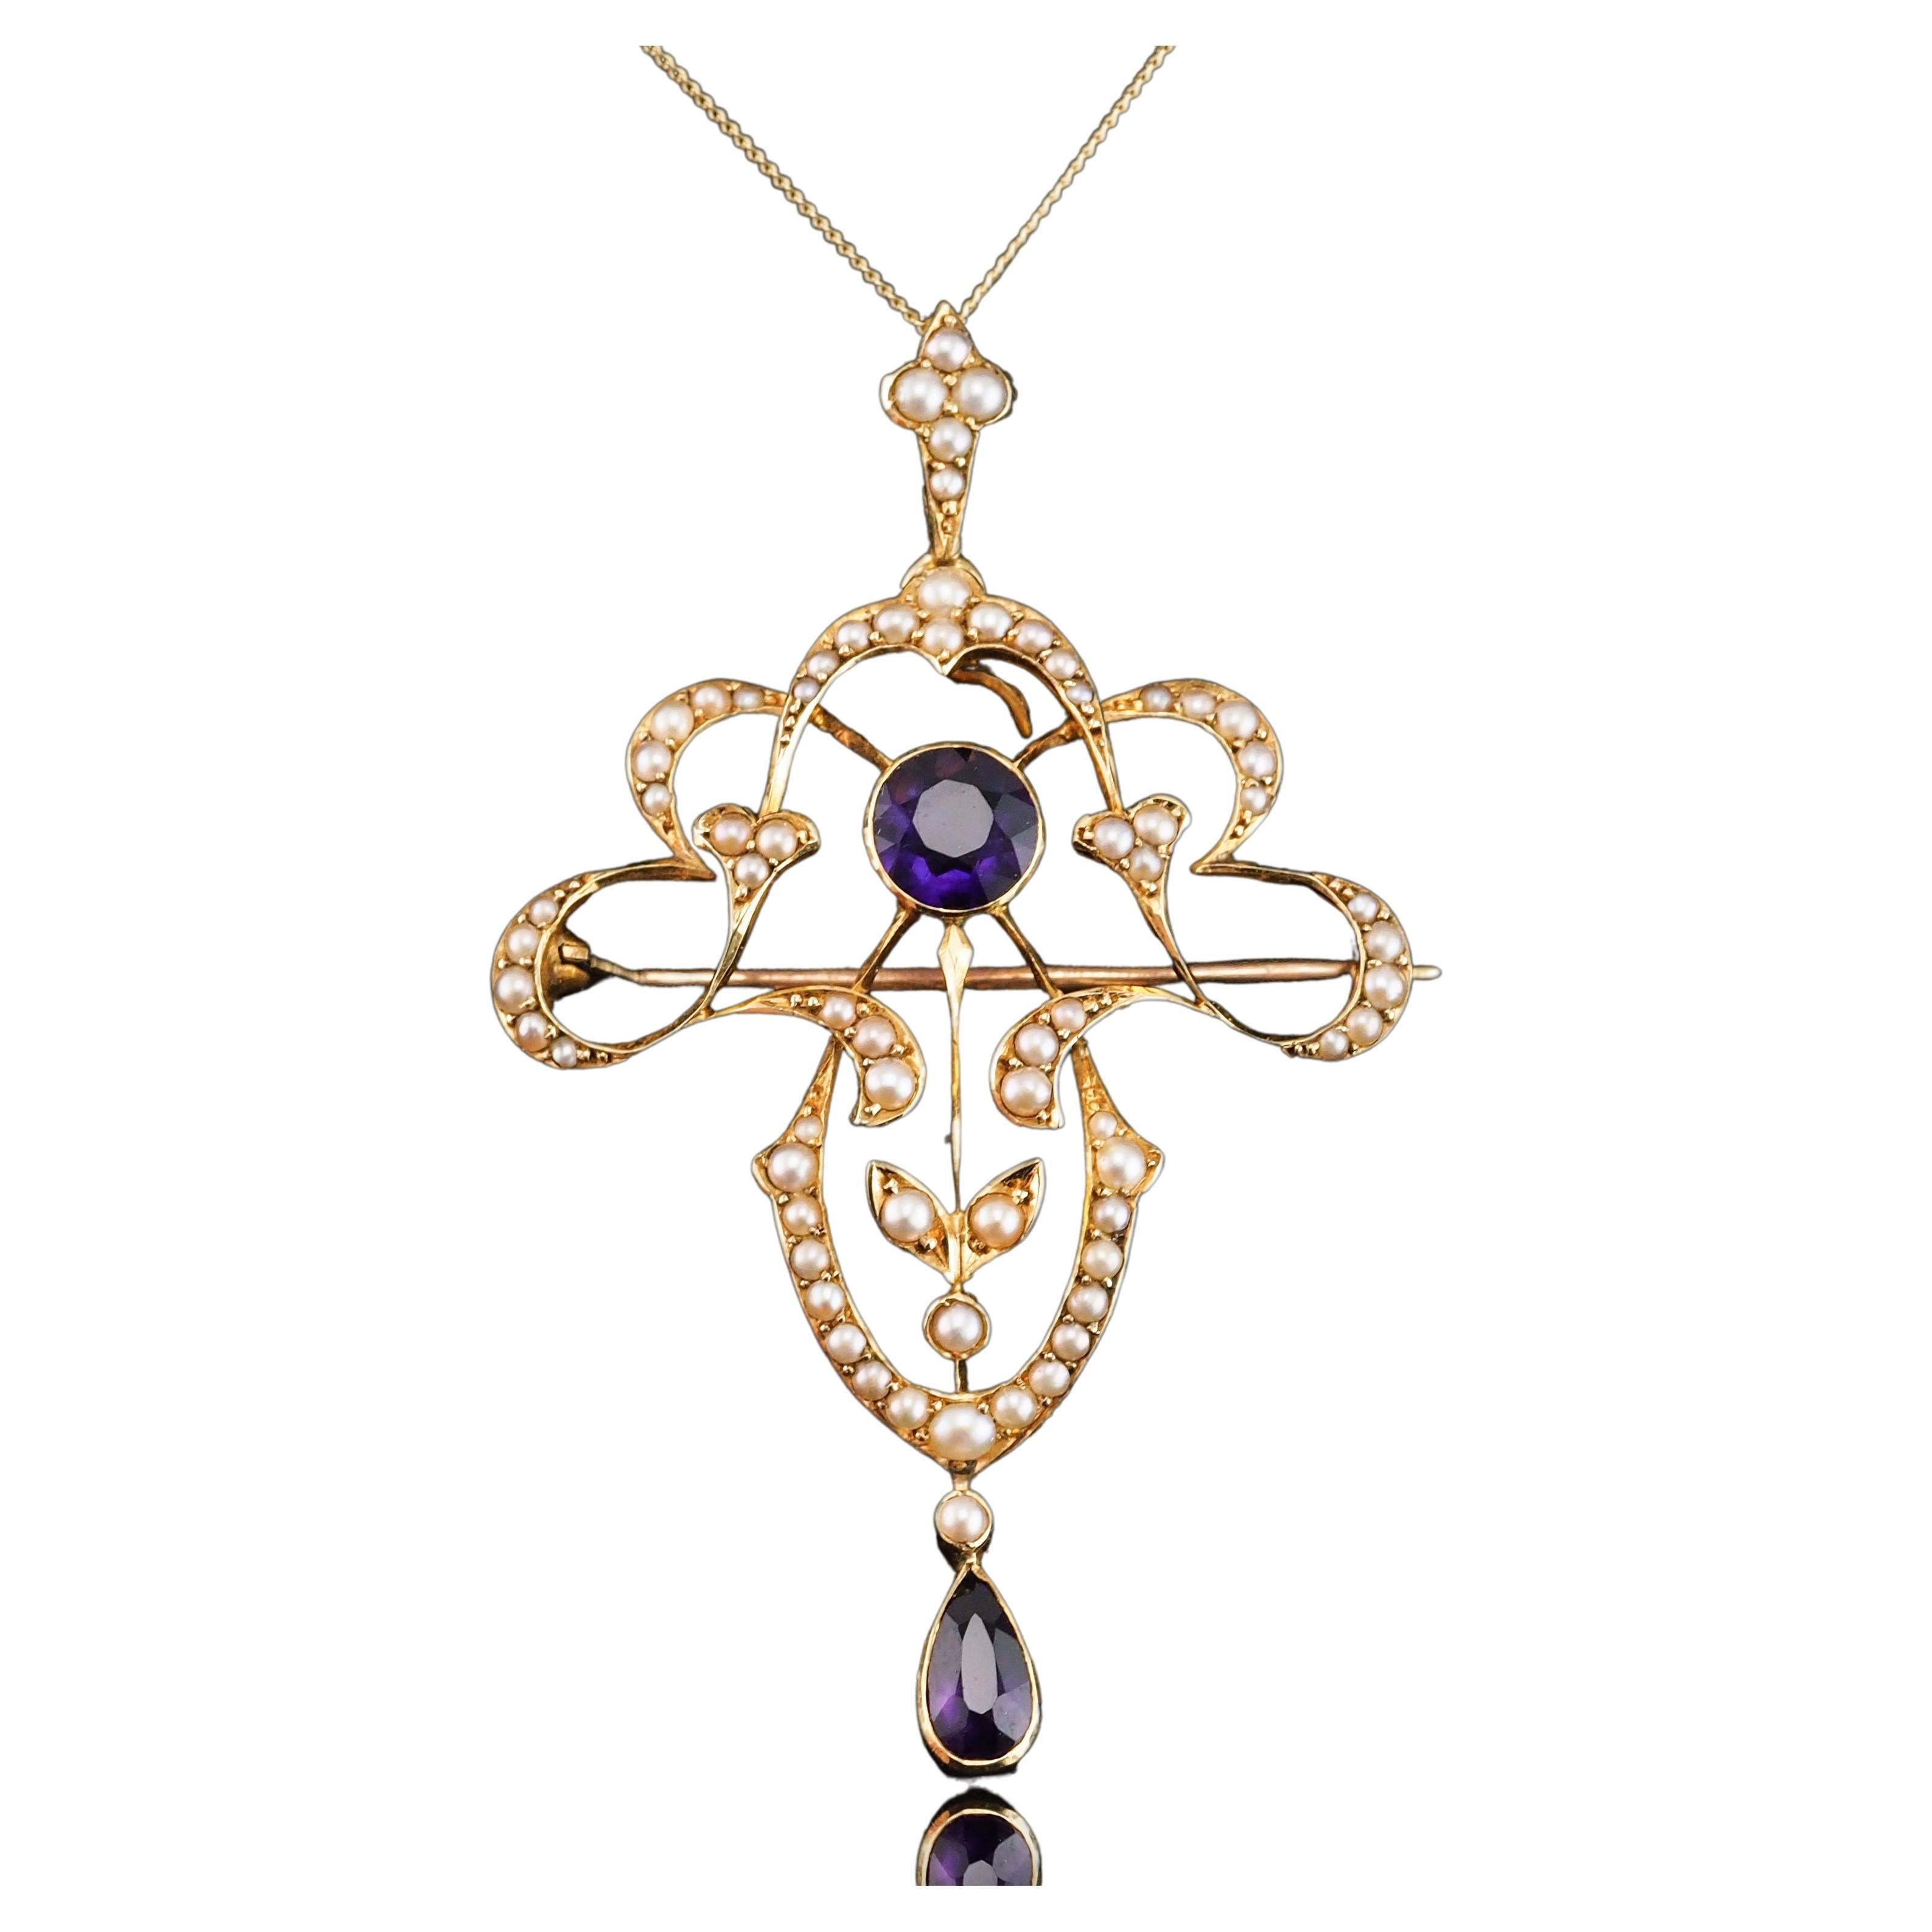 Antique Edwardian Amethyst & Seed Pearl 15K Gold Pendant Necklace Art Nouveau  For Sale